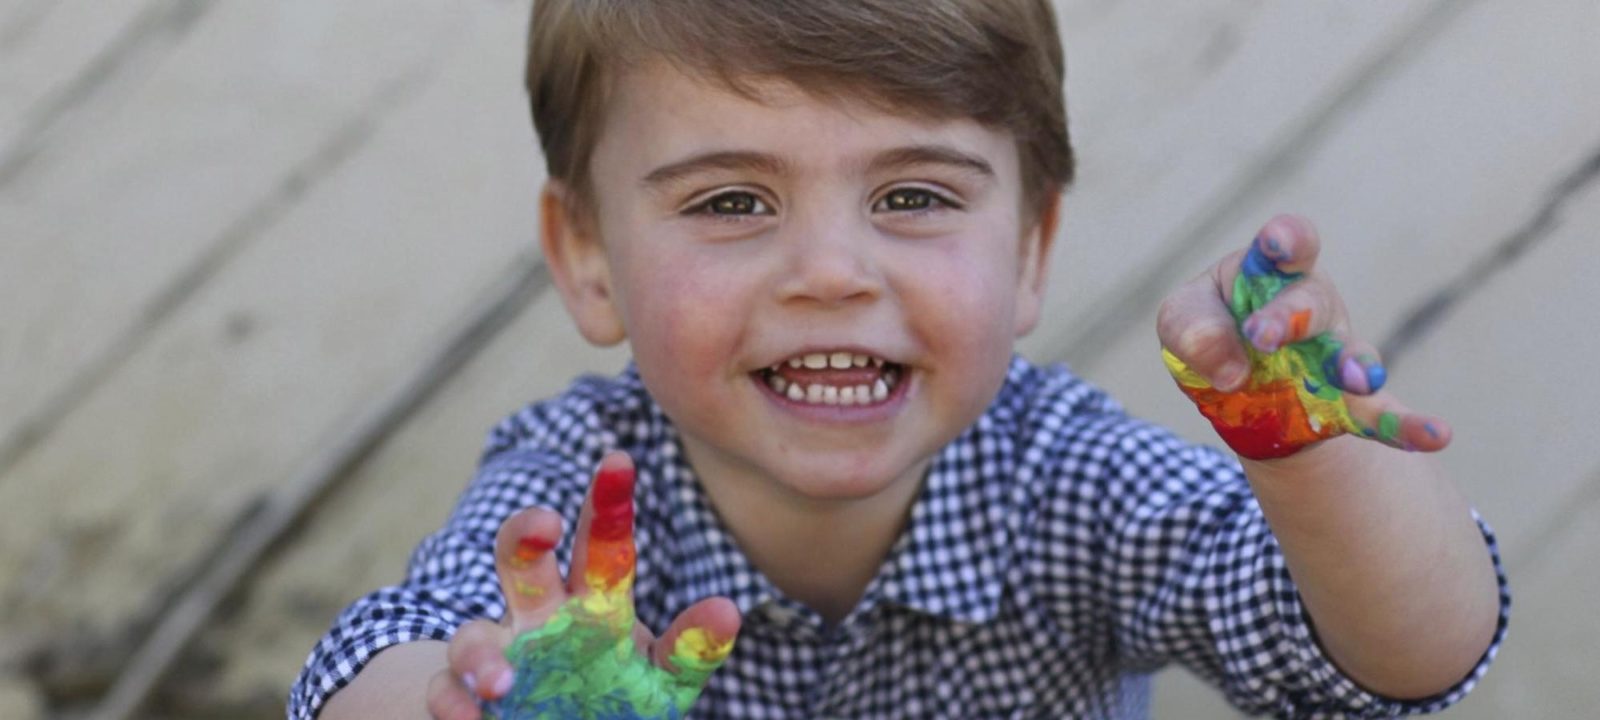 Queen Elizabeth II’s Great-Grandson, Prince Louis, Offers Rainbow of Hope in Second Birthday ...